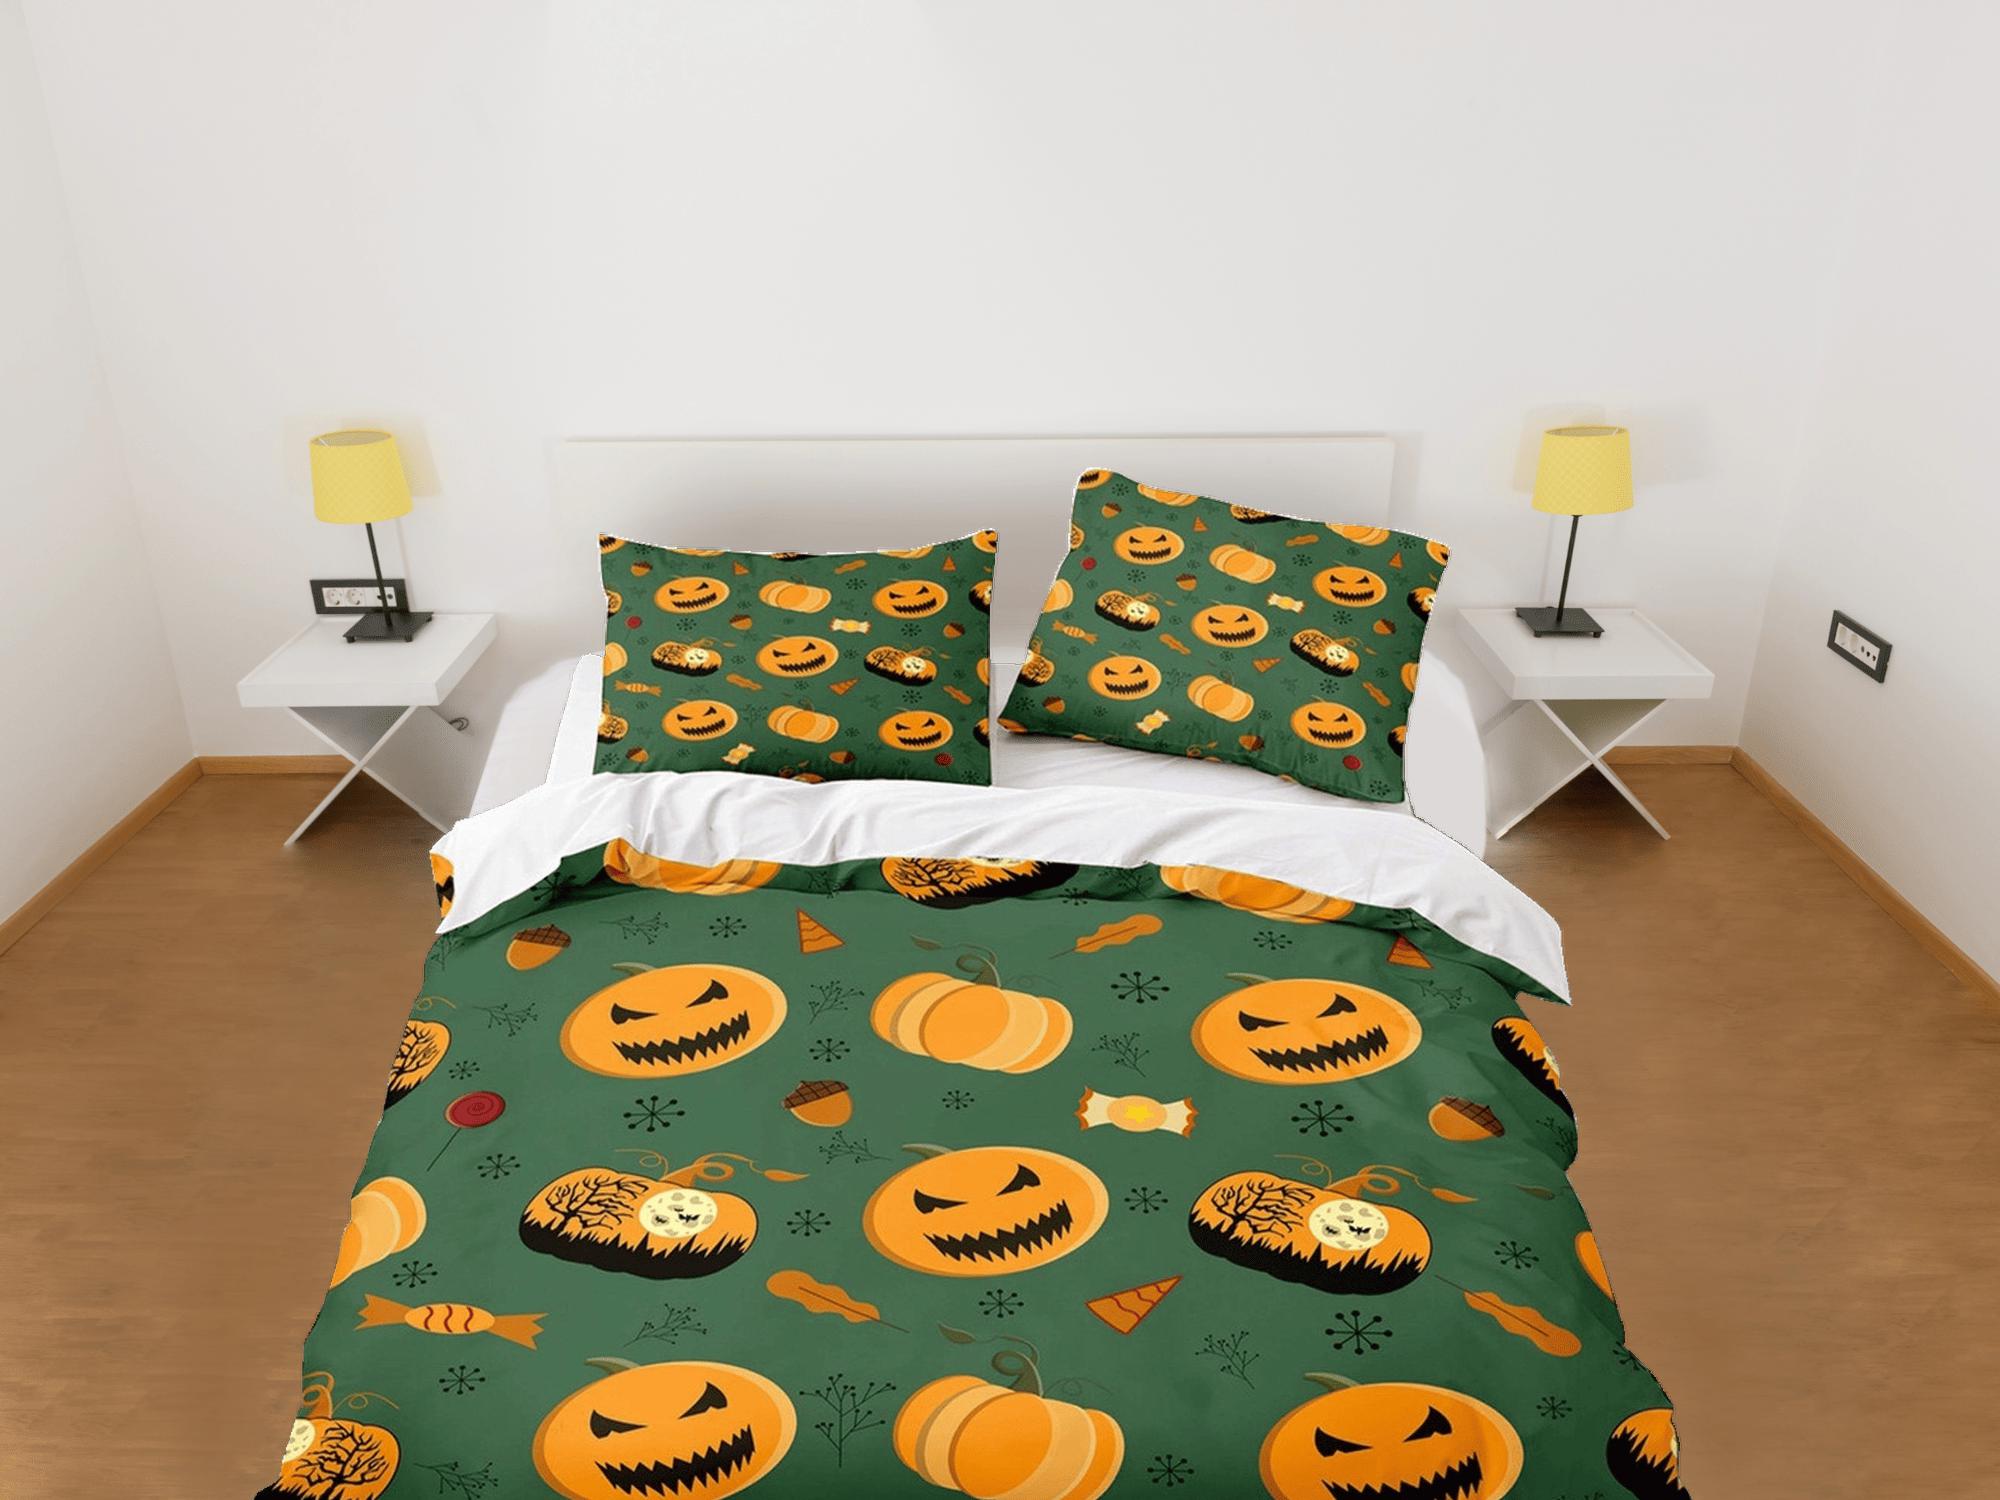 daintyduvet Pumpkin halloween full bedding & pillowcase, green duvet cover set dorm bedding, halloween decor, nursery toddler bedding, halloween gift